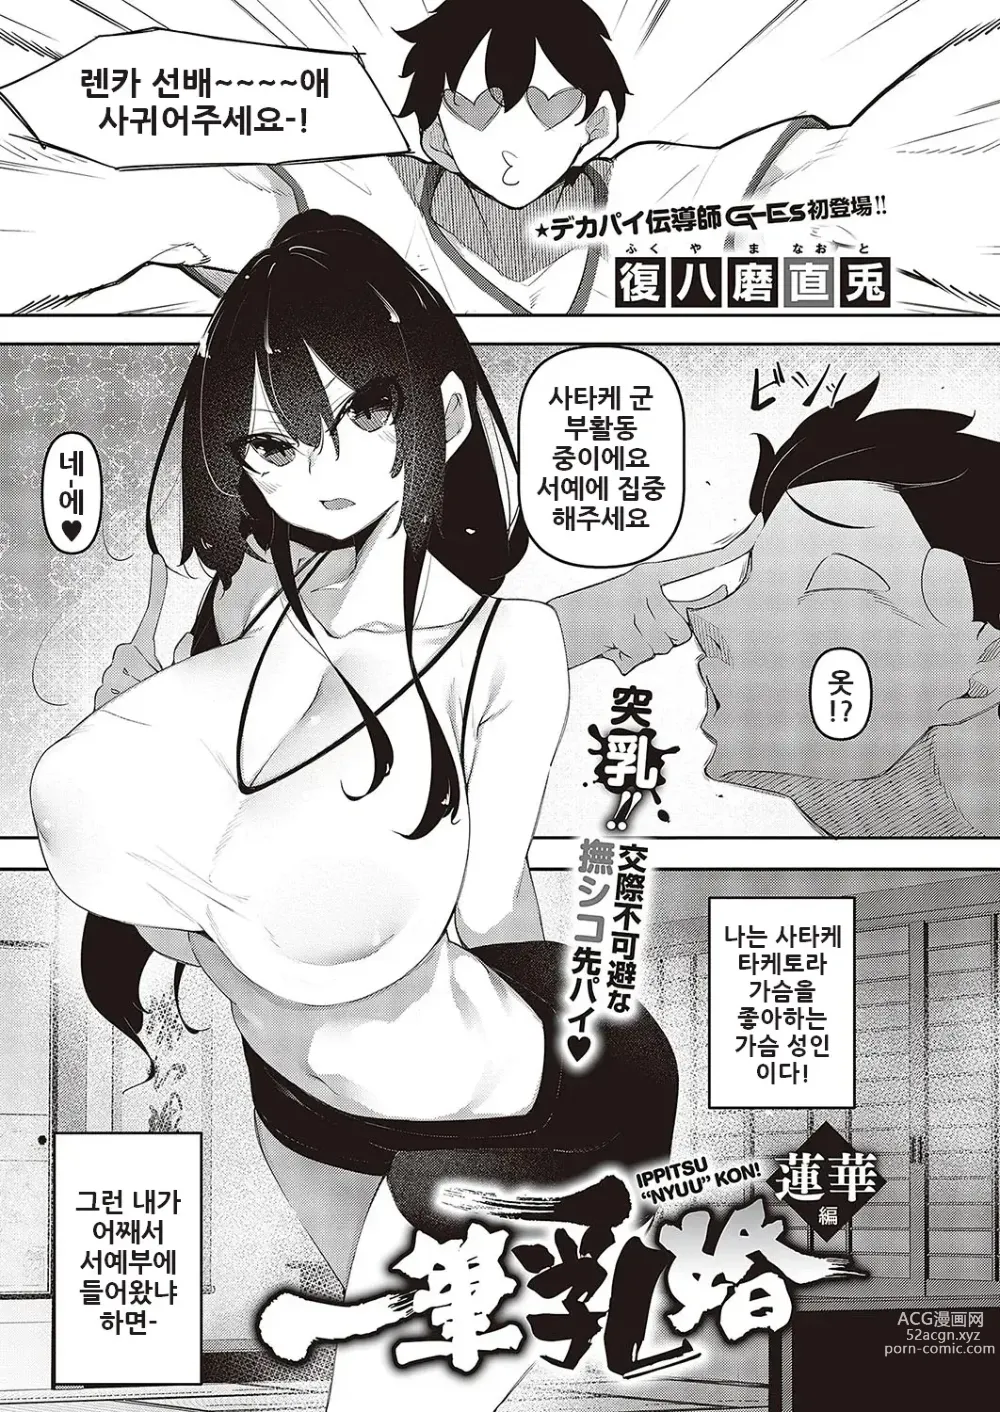 Page 1 of manga 일필유(乳)혼 렌카 편